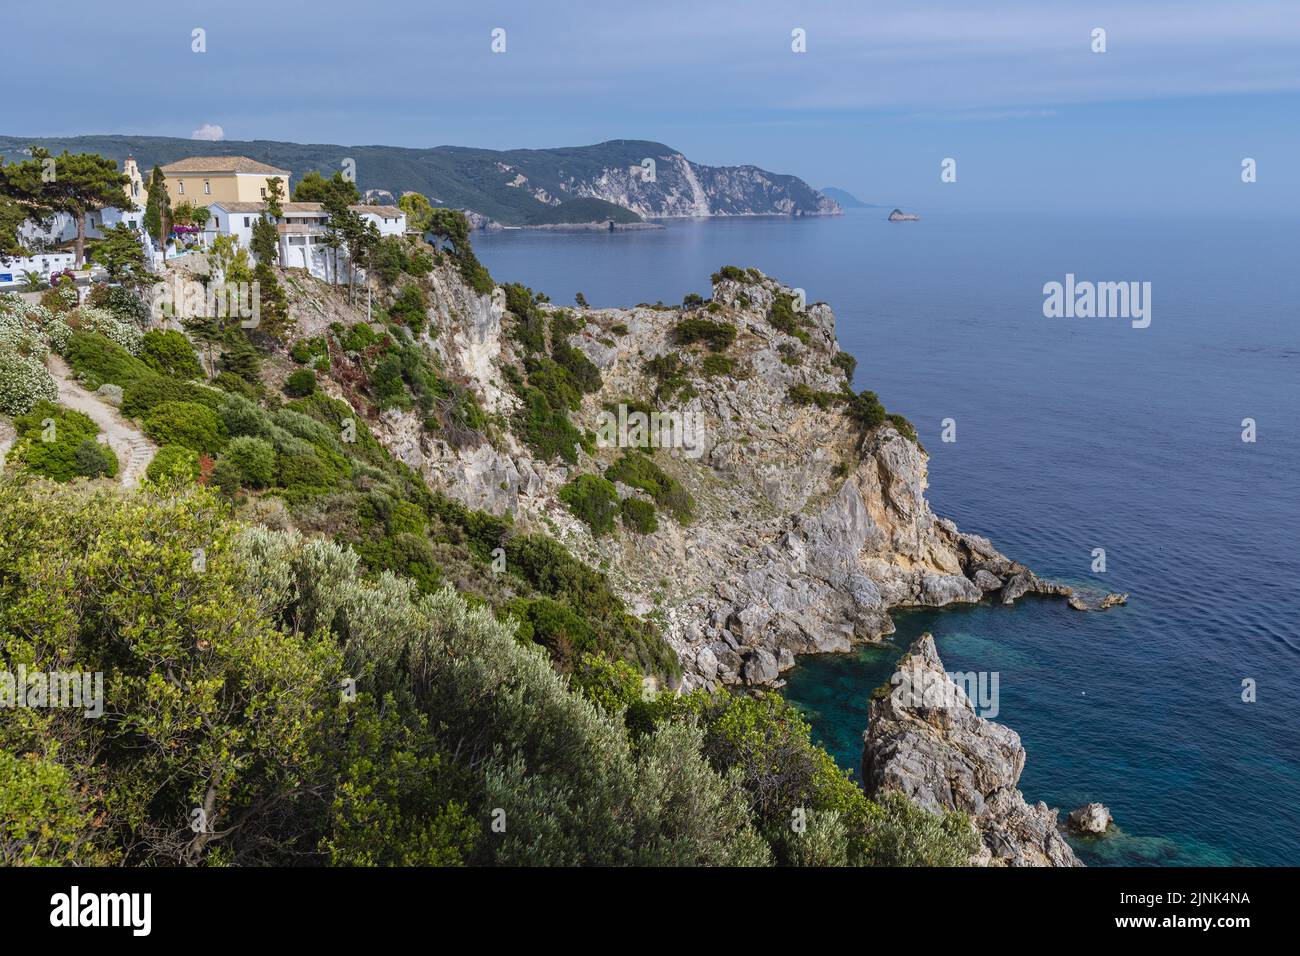 Aerial view with Monastery in Palaiokastritsa famous resort town on Greek Island of Corfu Stock Photo